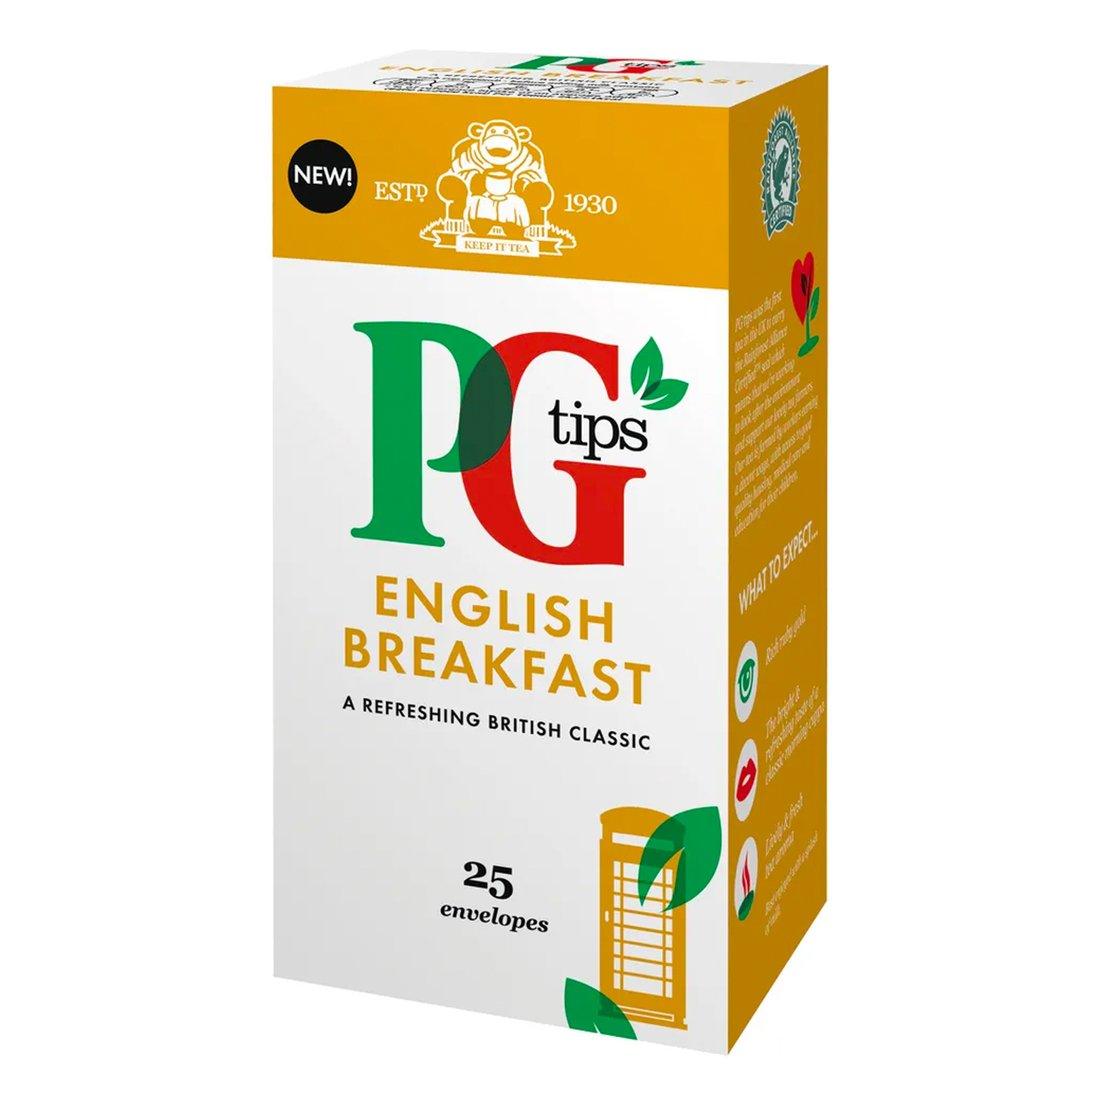 PG Tips: English Breakfast Envelope Tea Bags - 25 Bags - Vending Superstore